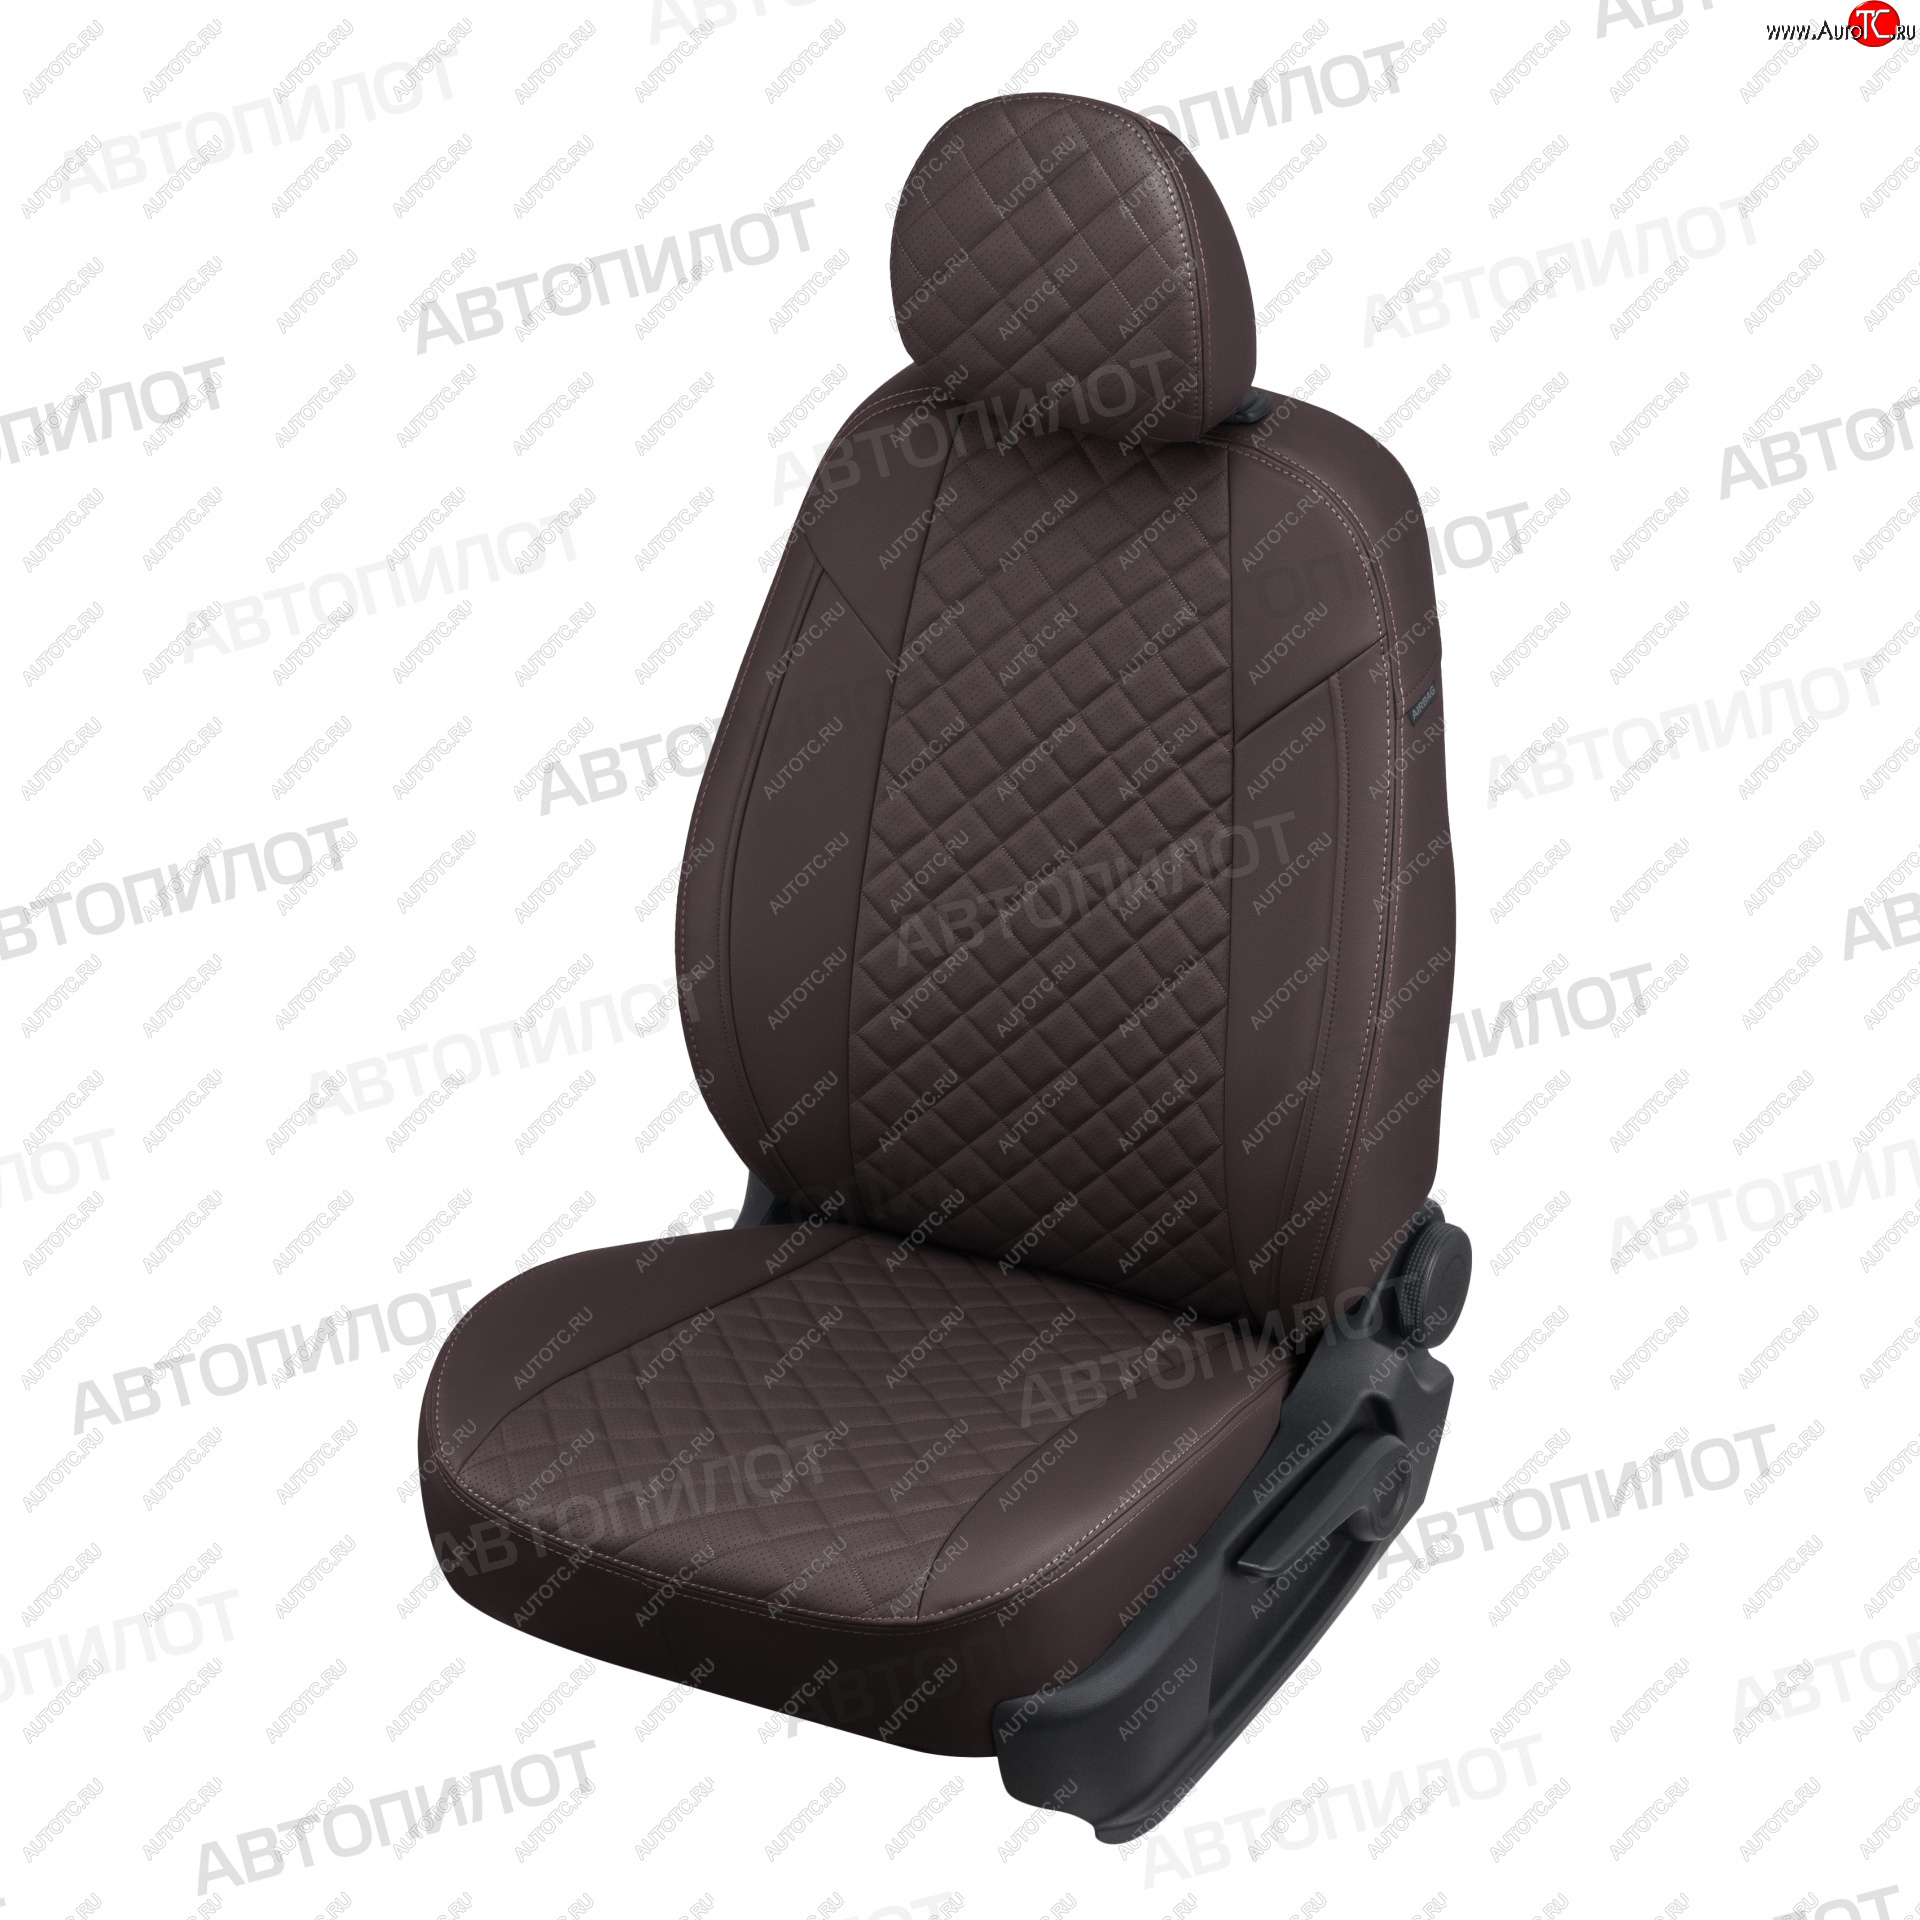 14 499 р. Чехлы сидений (Titanium, экокожа) Автопилот Ромб  Ford Mondeo  MK5 CD391 (2014-2024) (шоколад)